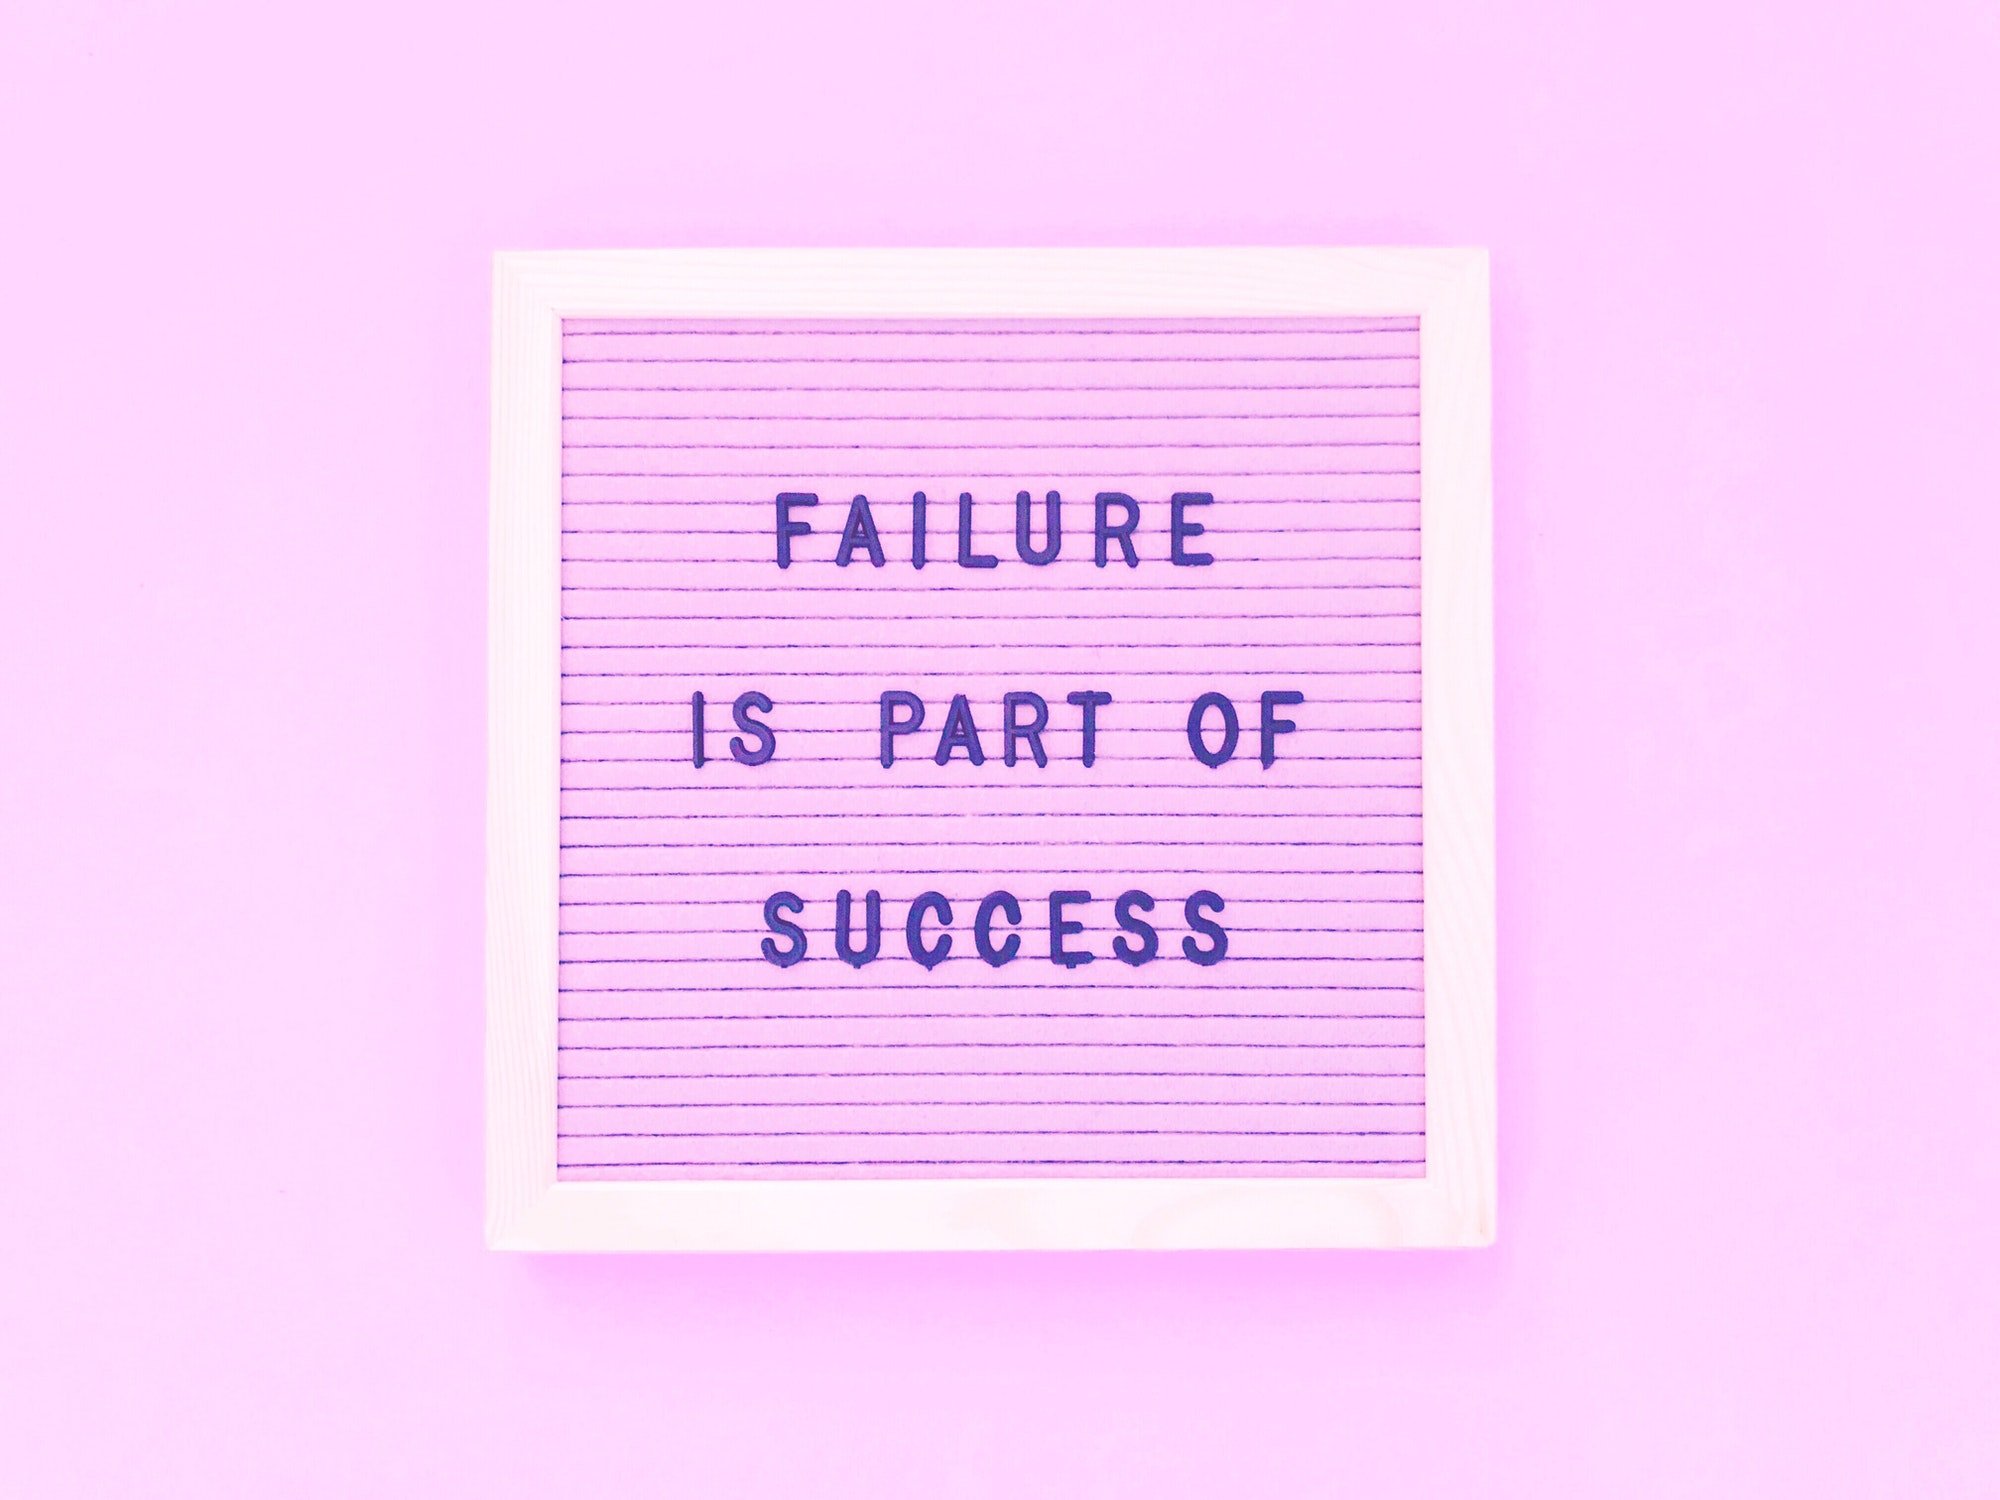 Failure is part of success